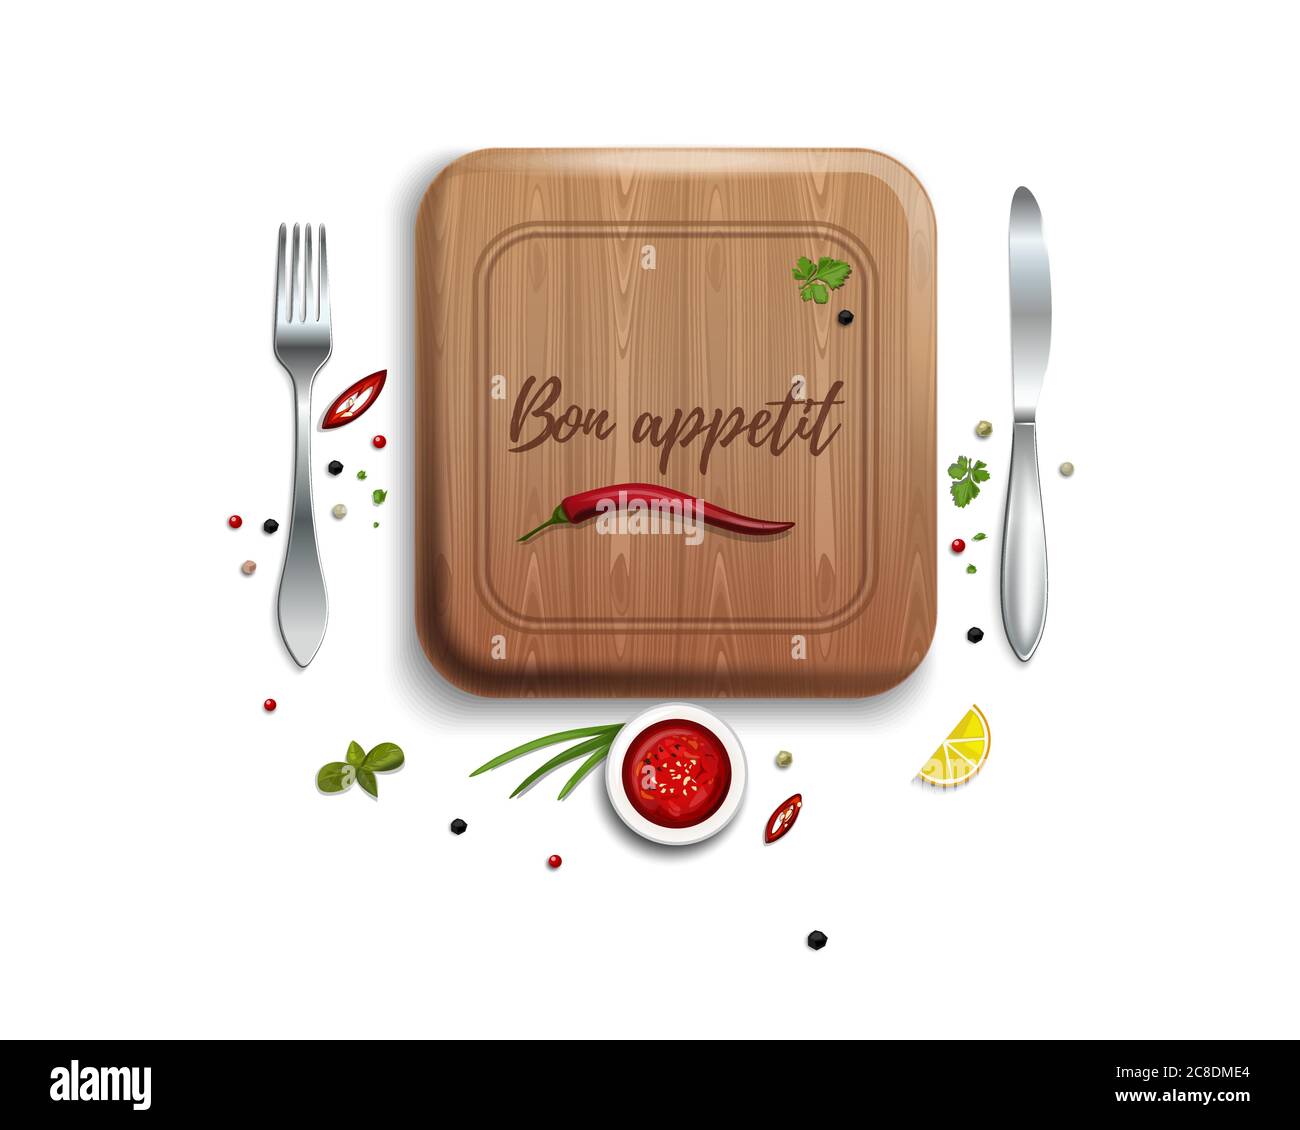 Bon appetit stock vector. Illustration of gourmet, color - 51339786